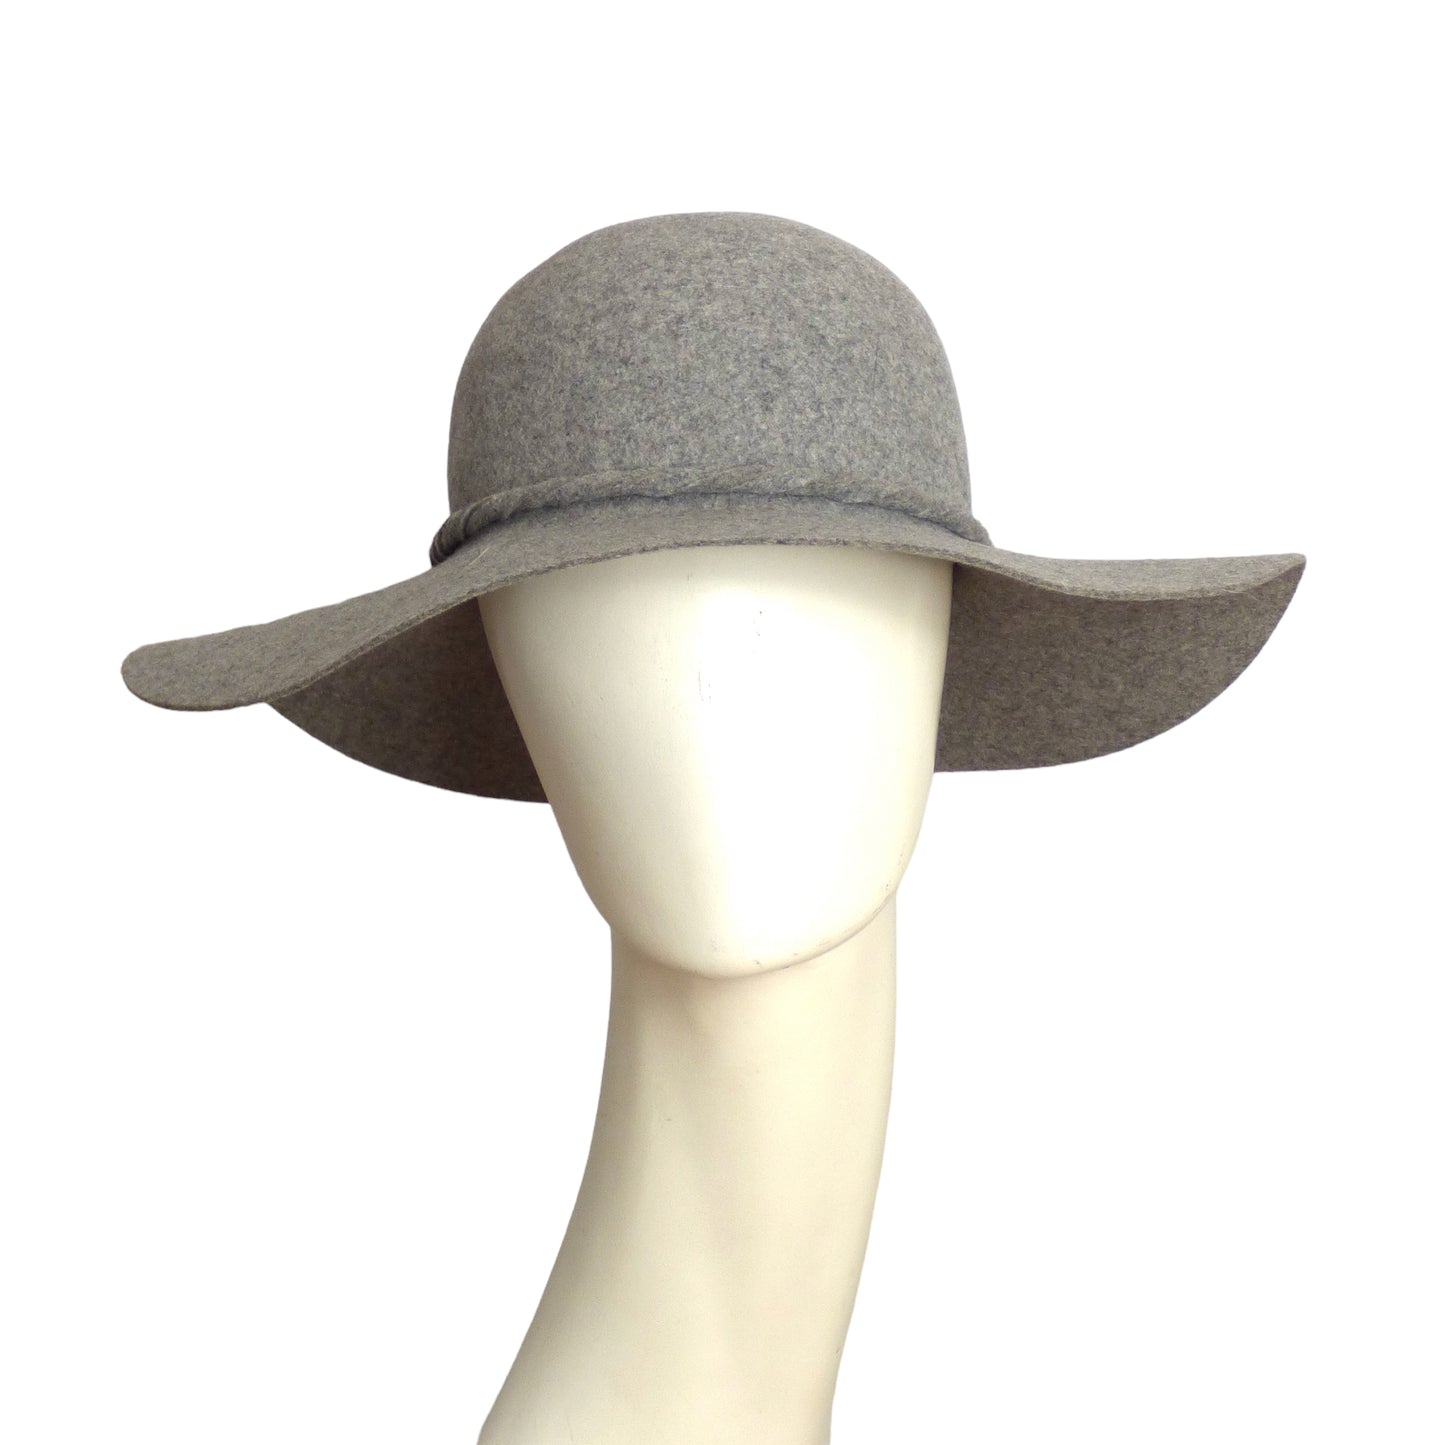 1980s Gray Wool Felt Hat